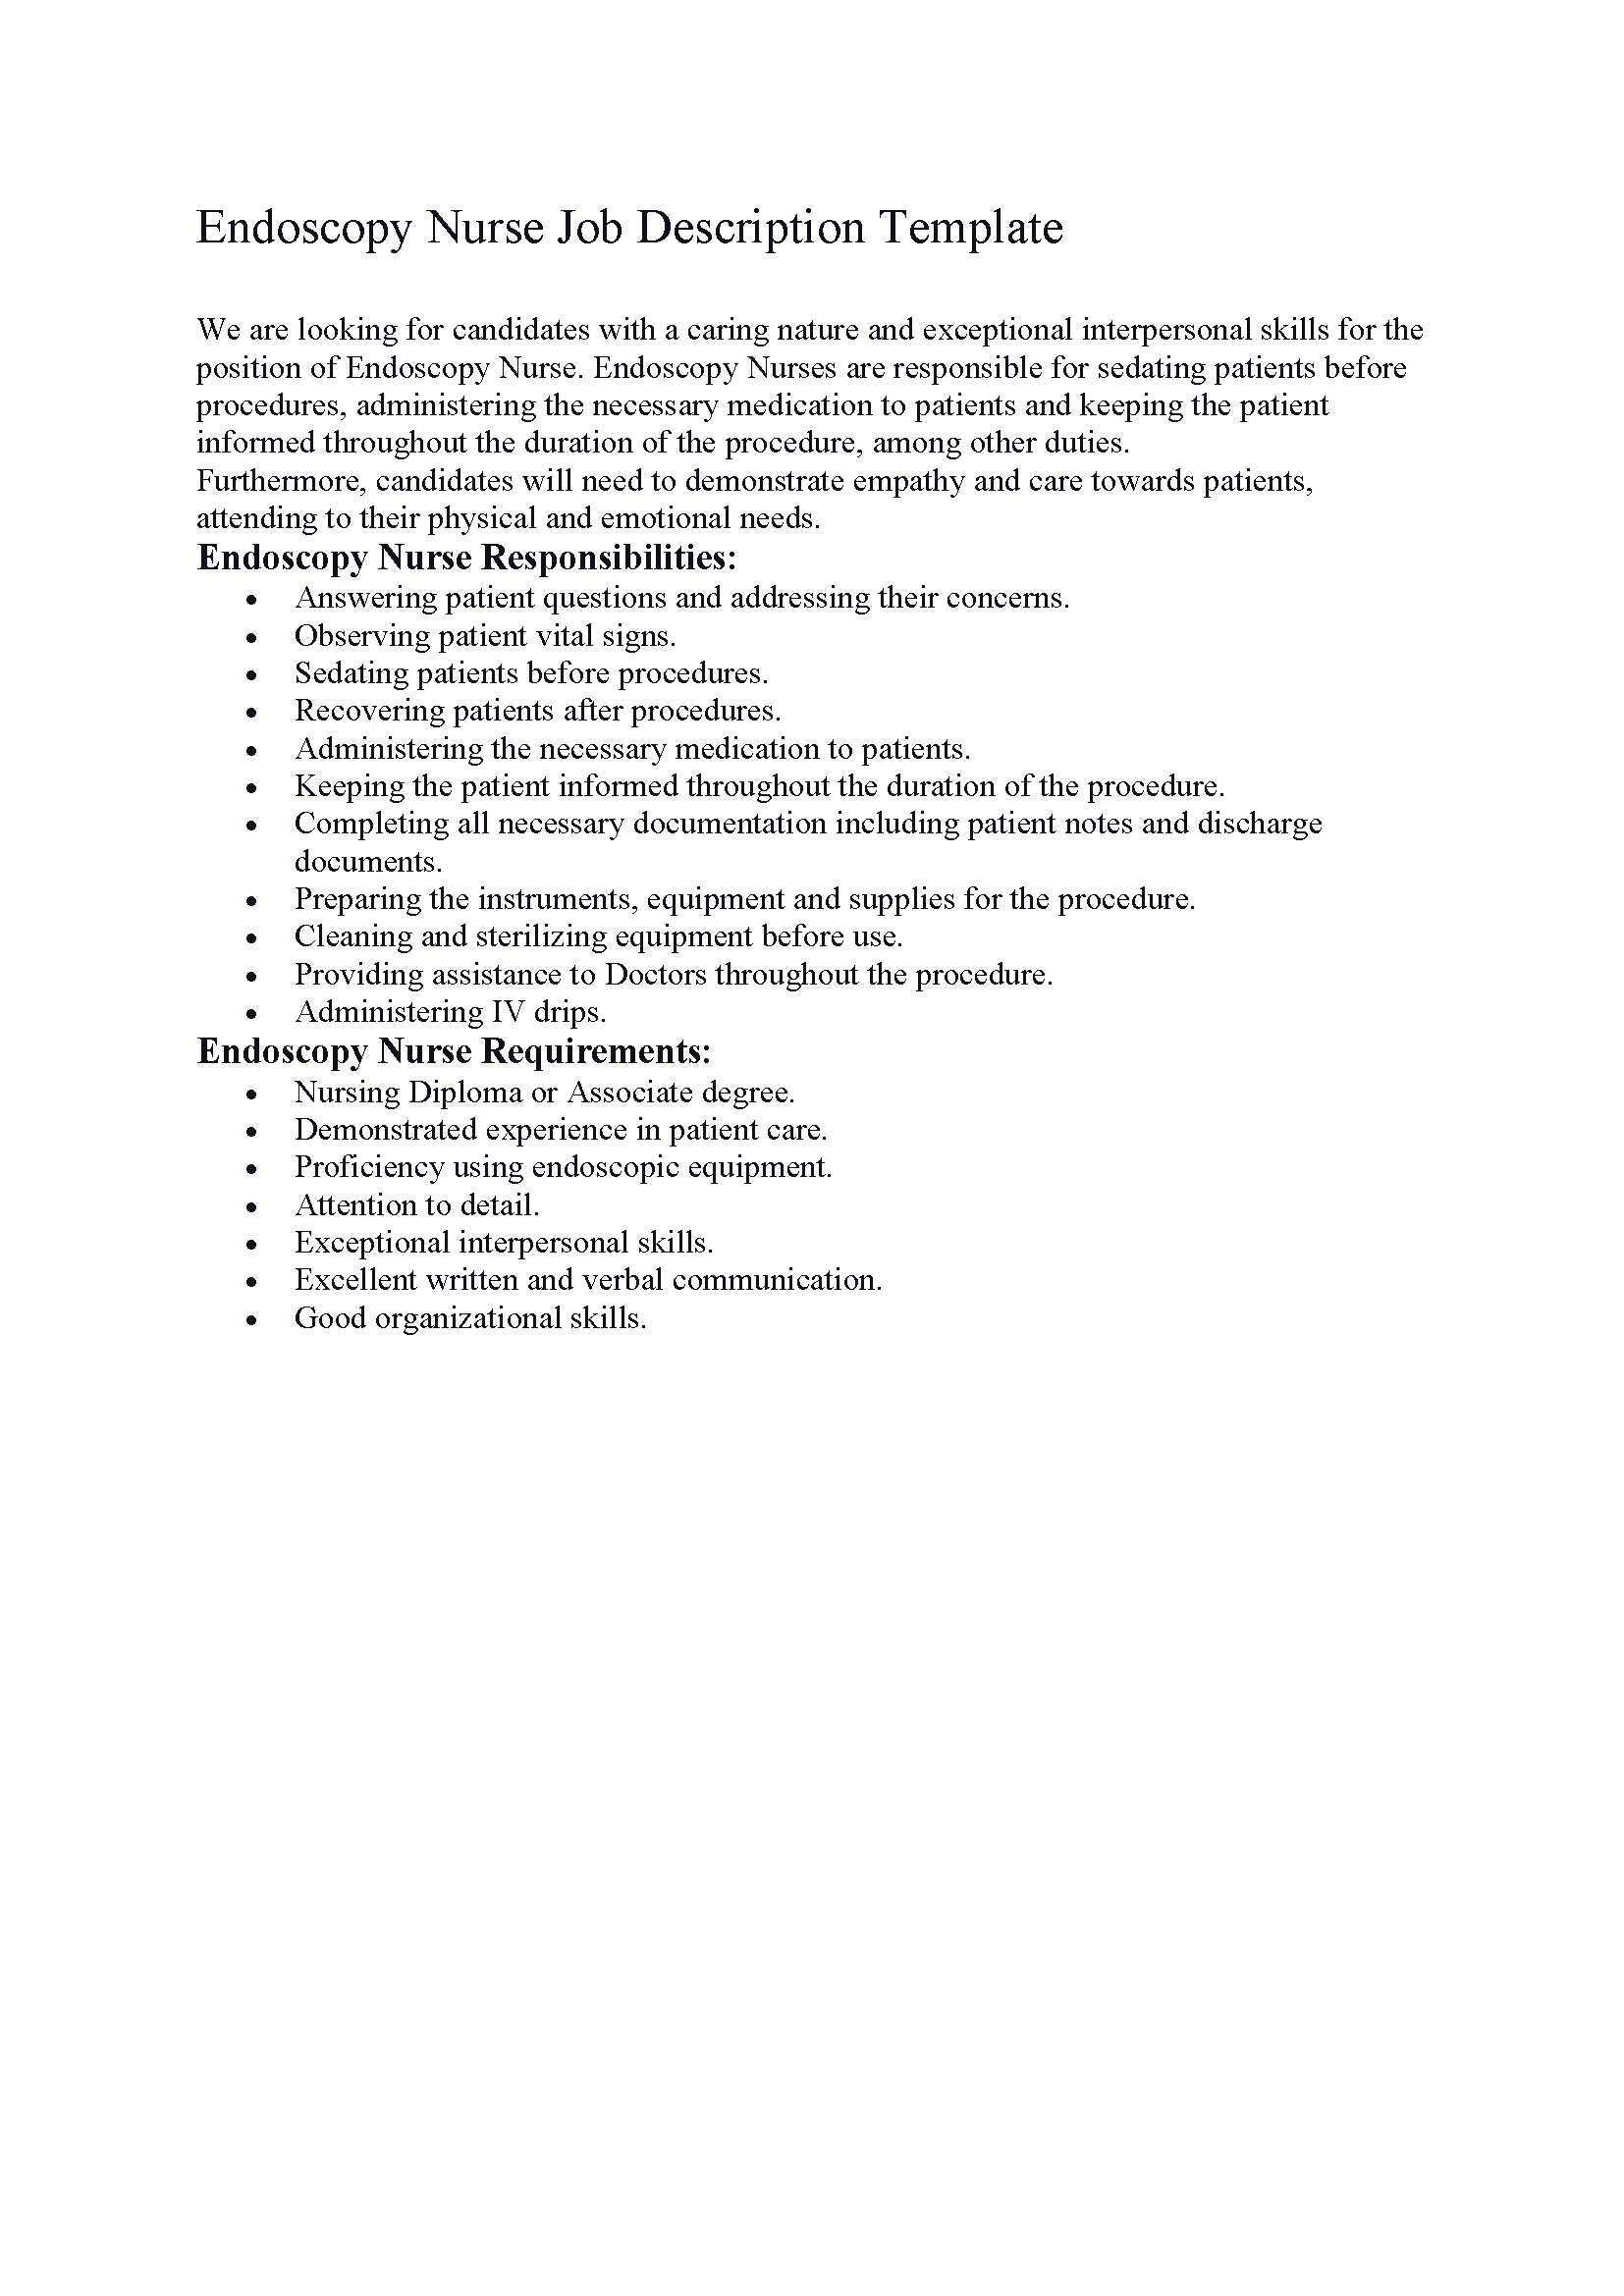 Endoscopy Nurse Job Description Template